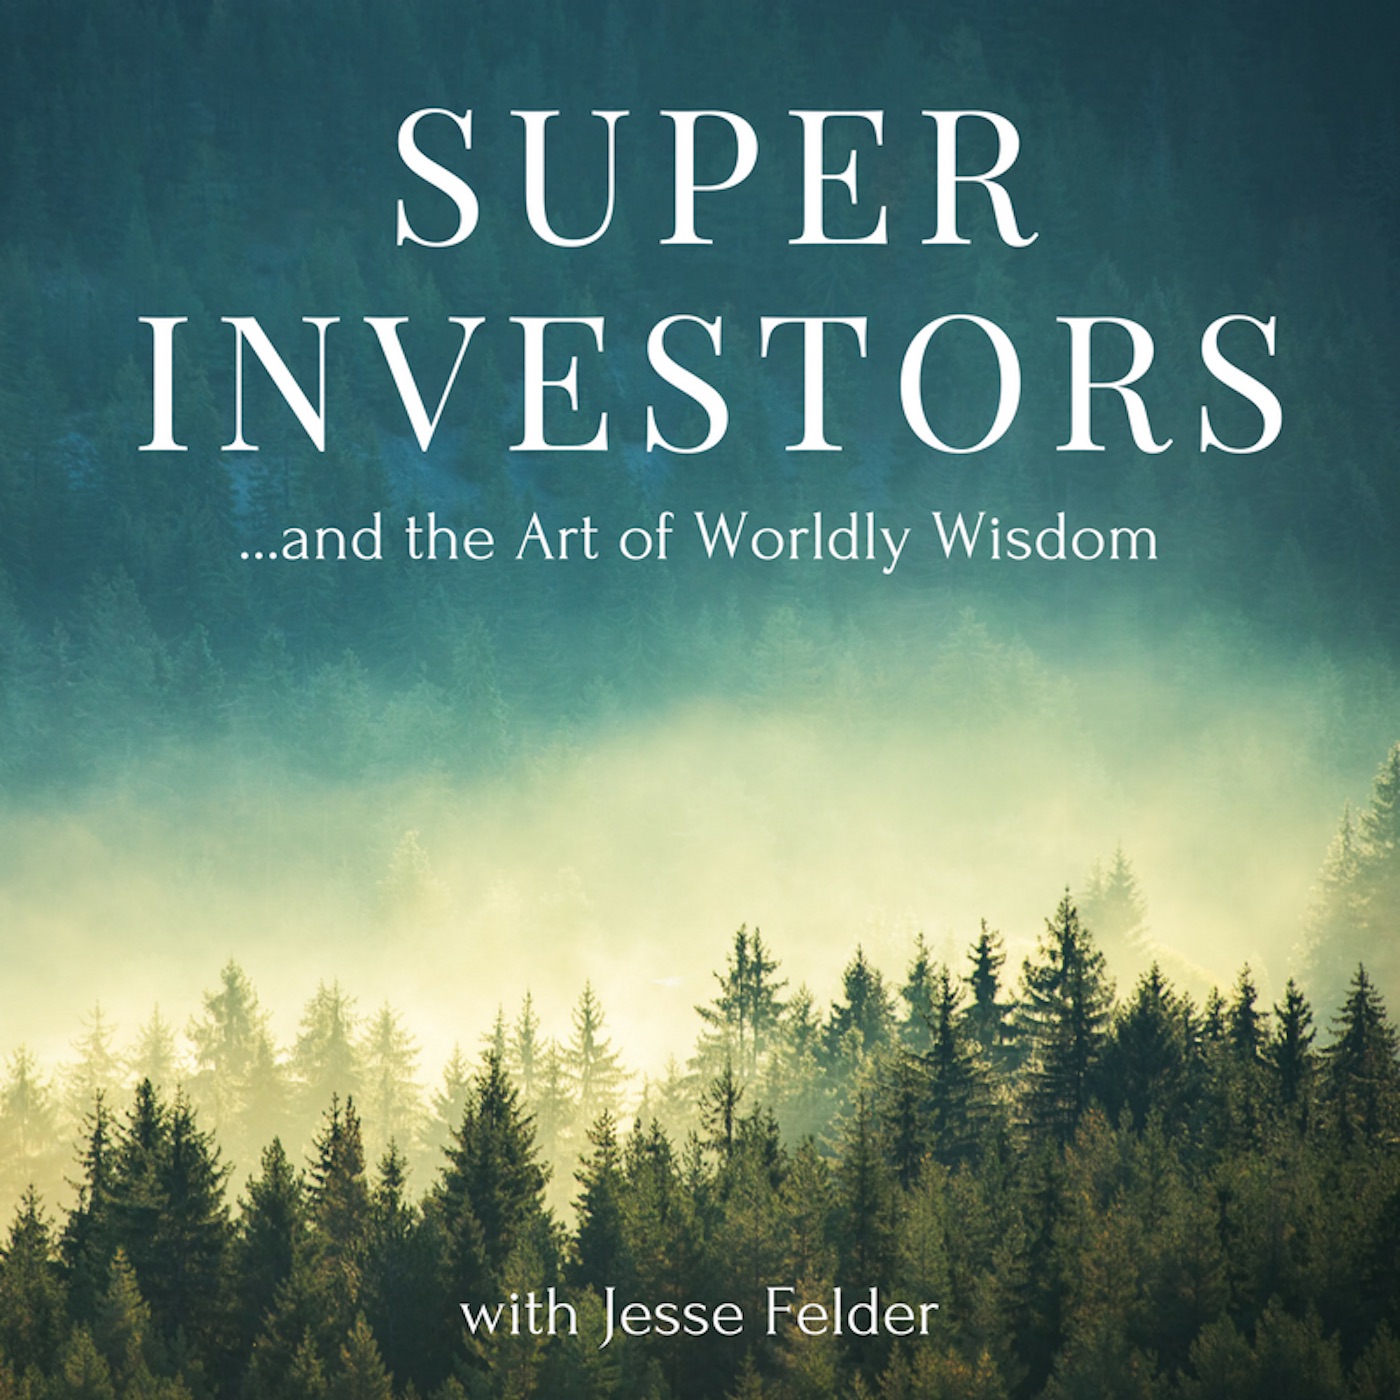 Superinvestors and the Art of Worldly Wisdom:Jesse Felder